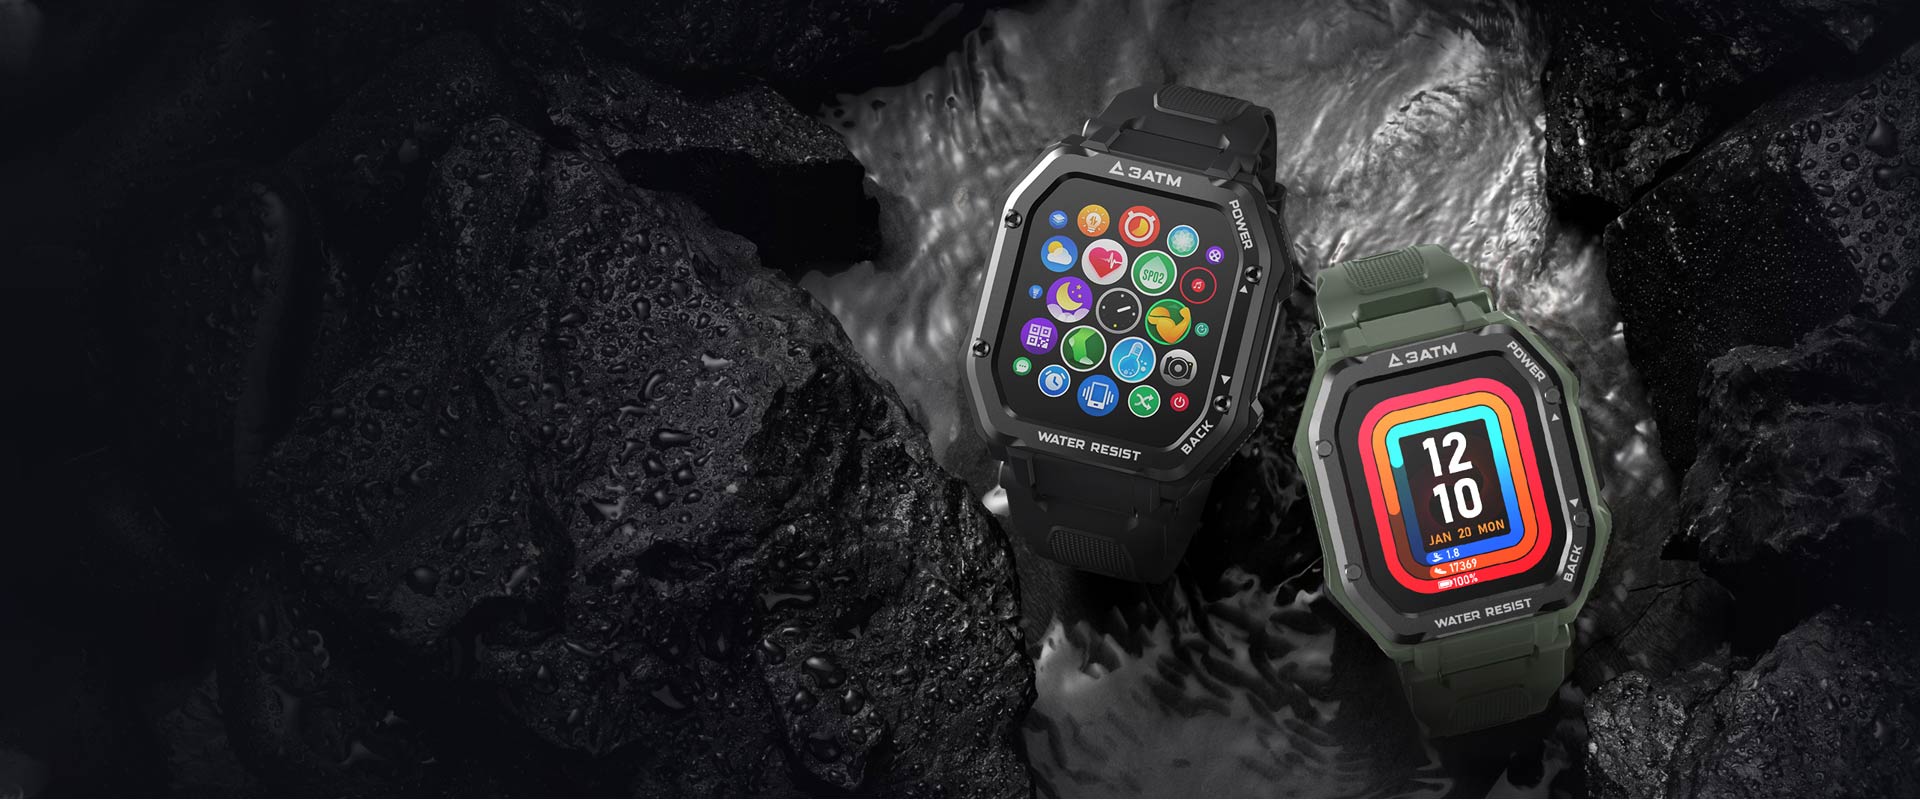 KOSPET ROCK Rugged Smartwatch Designed For Adventure